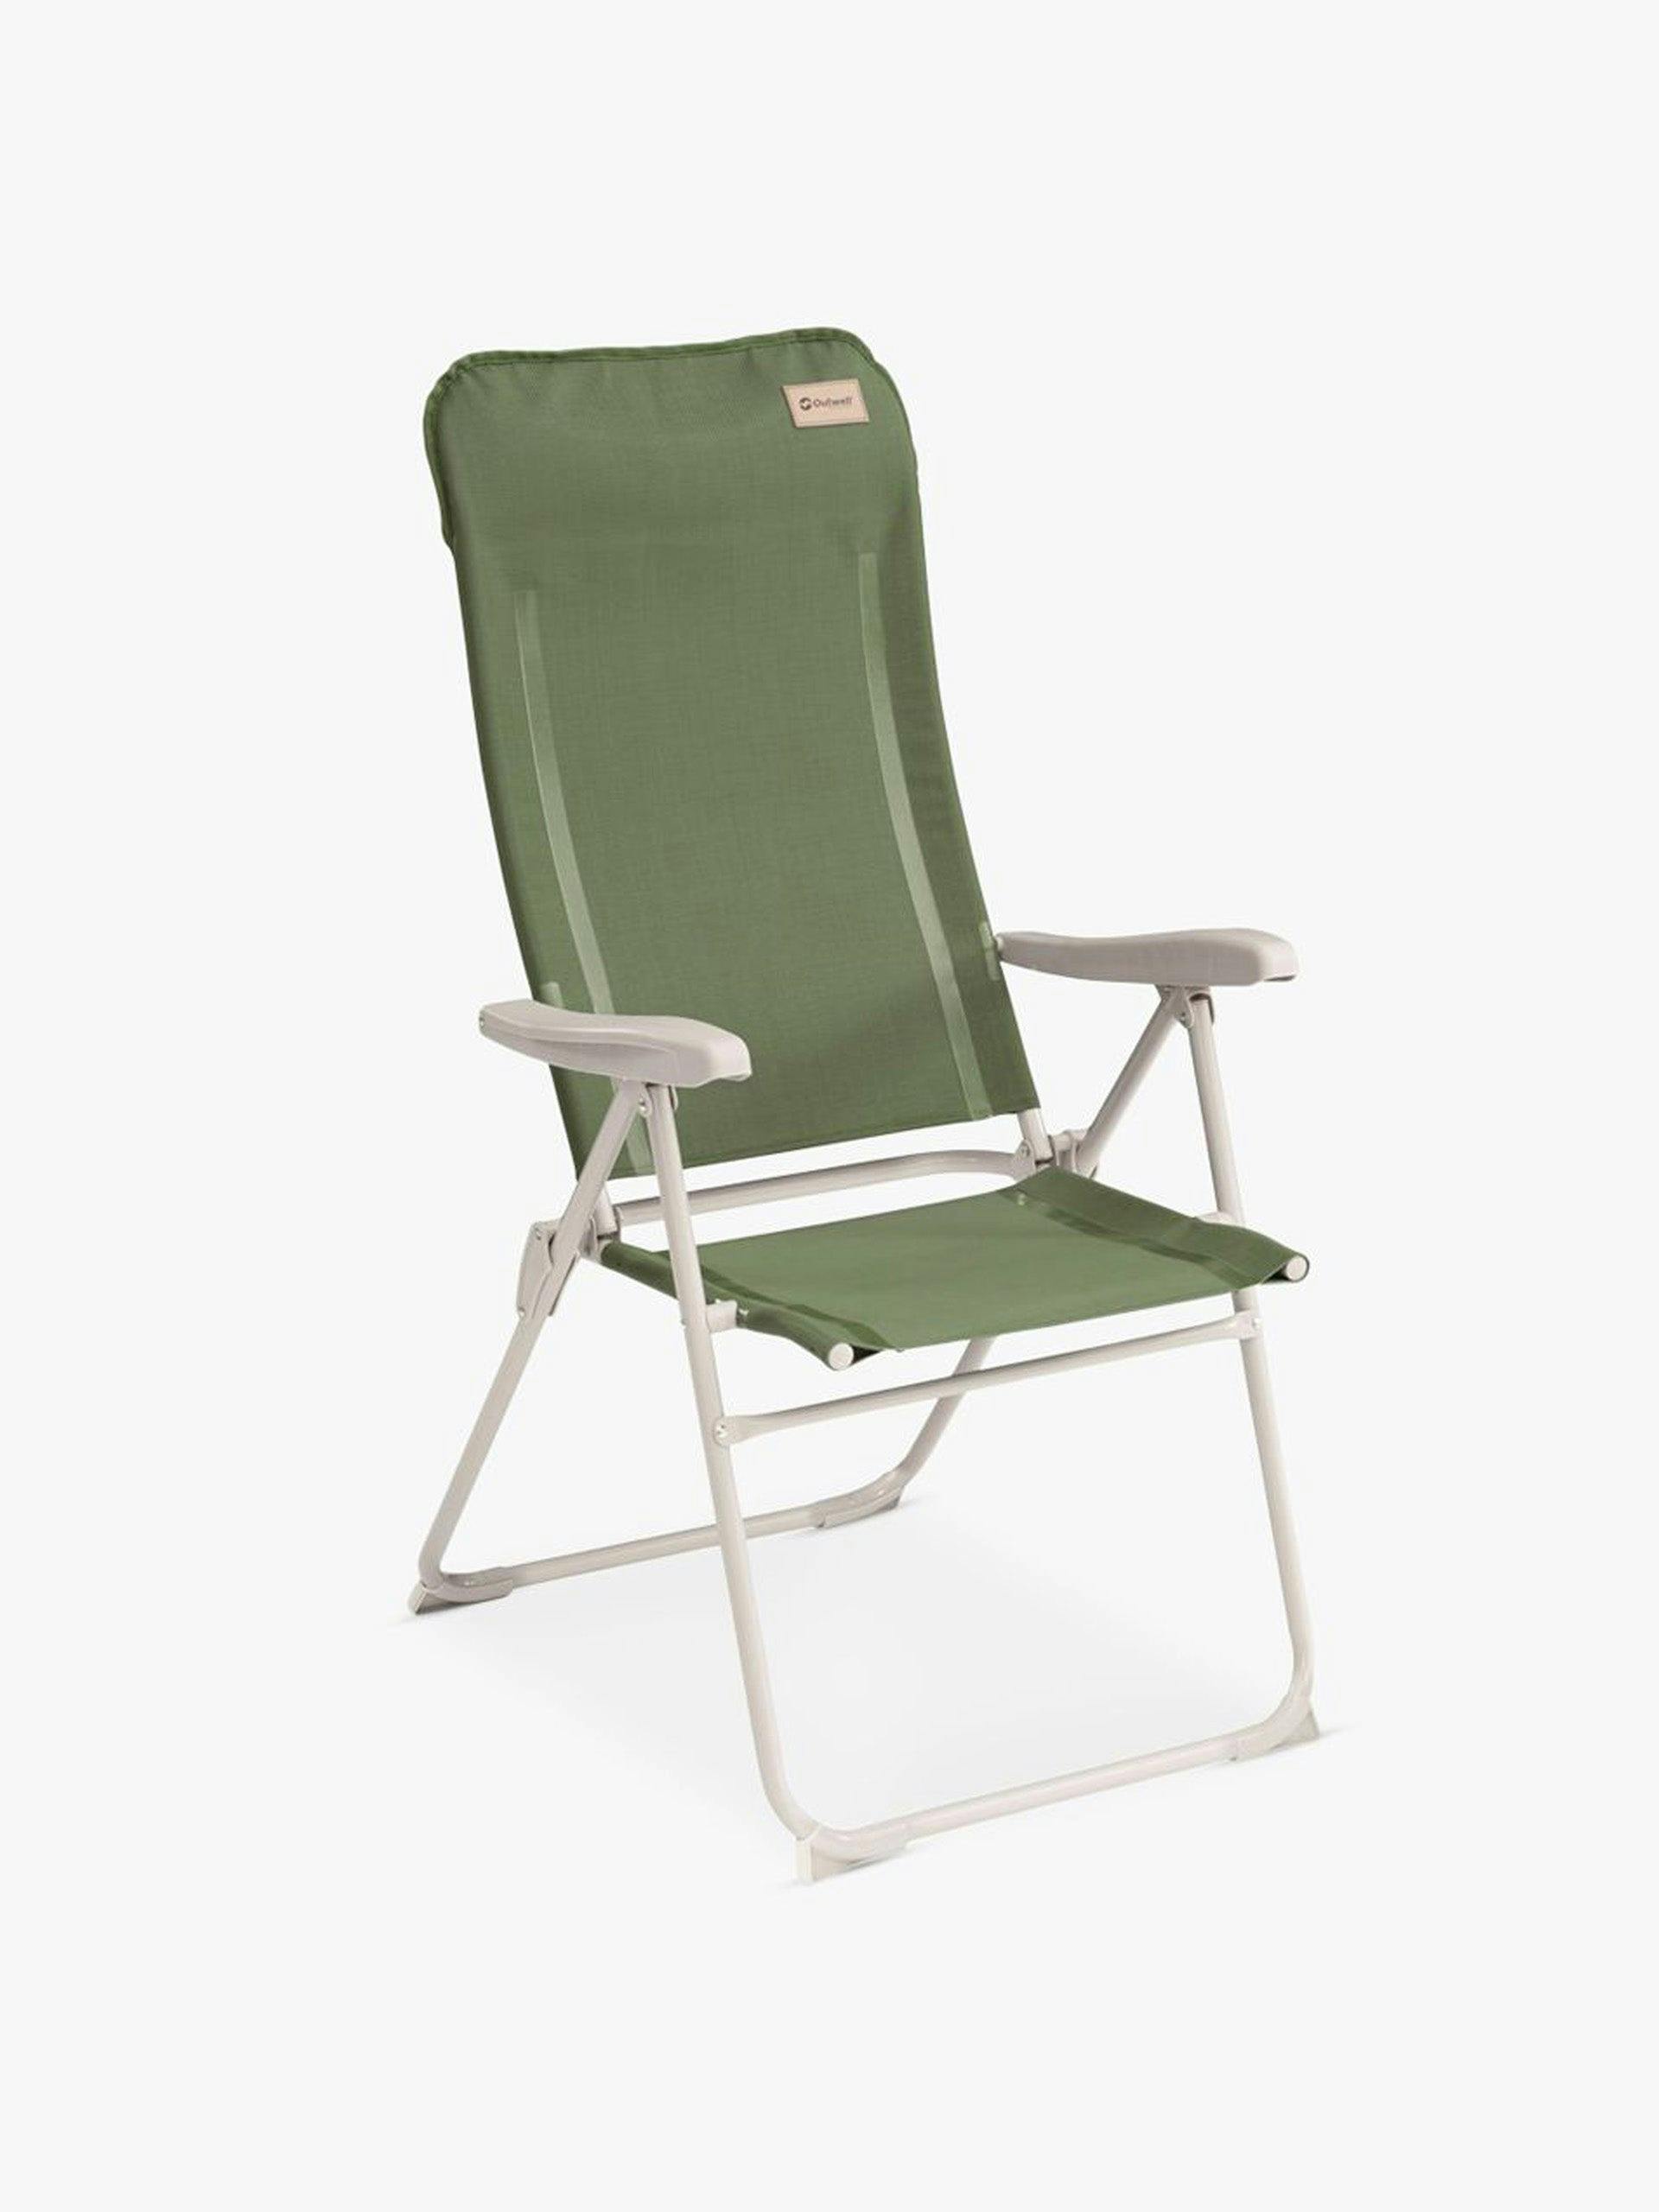 Green folding camping chair